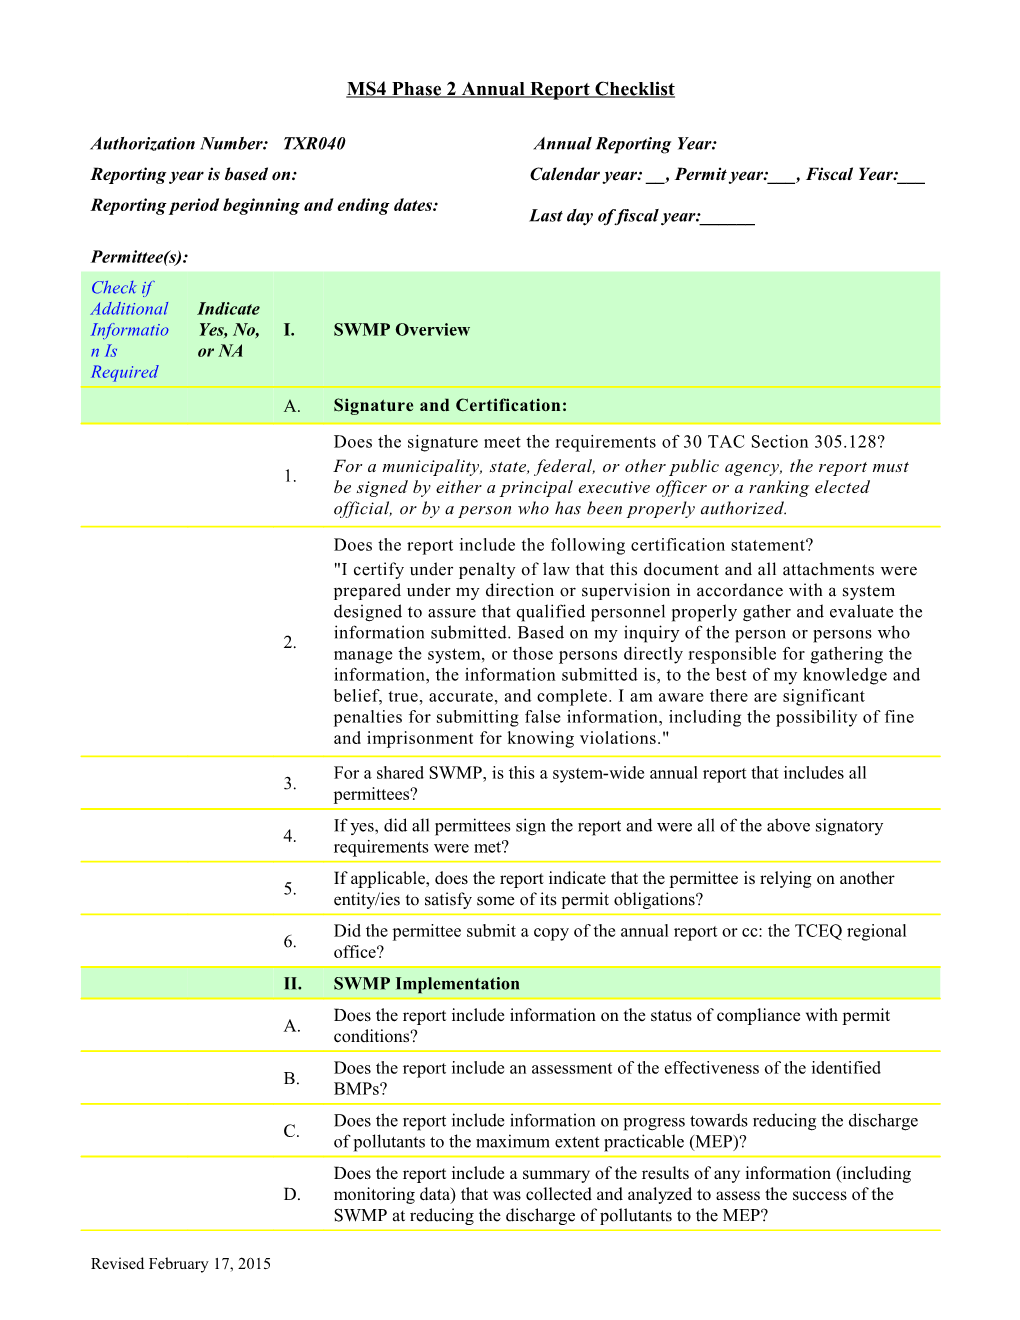 MS4 Phase 1 Annual Report Checklist